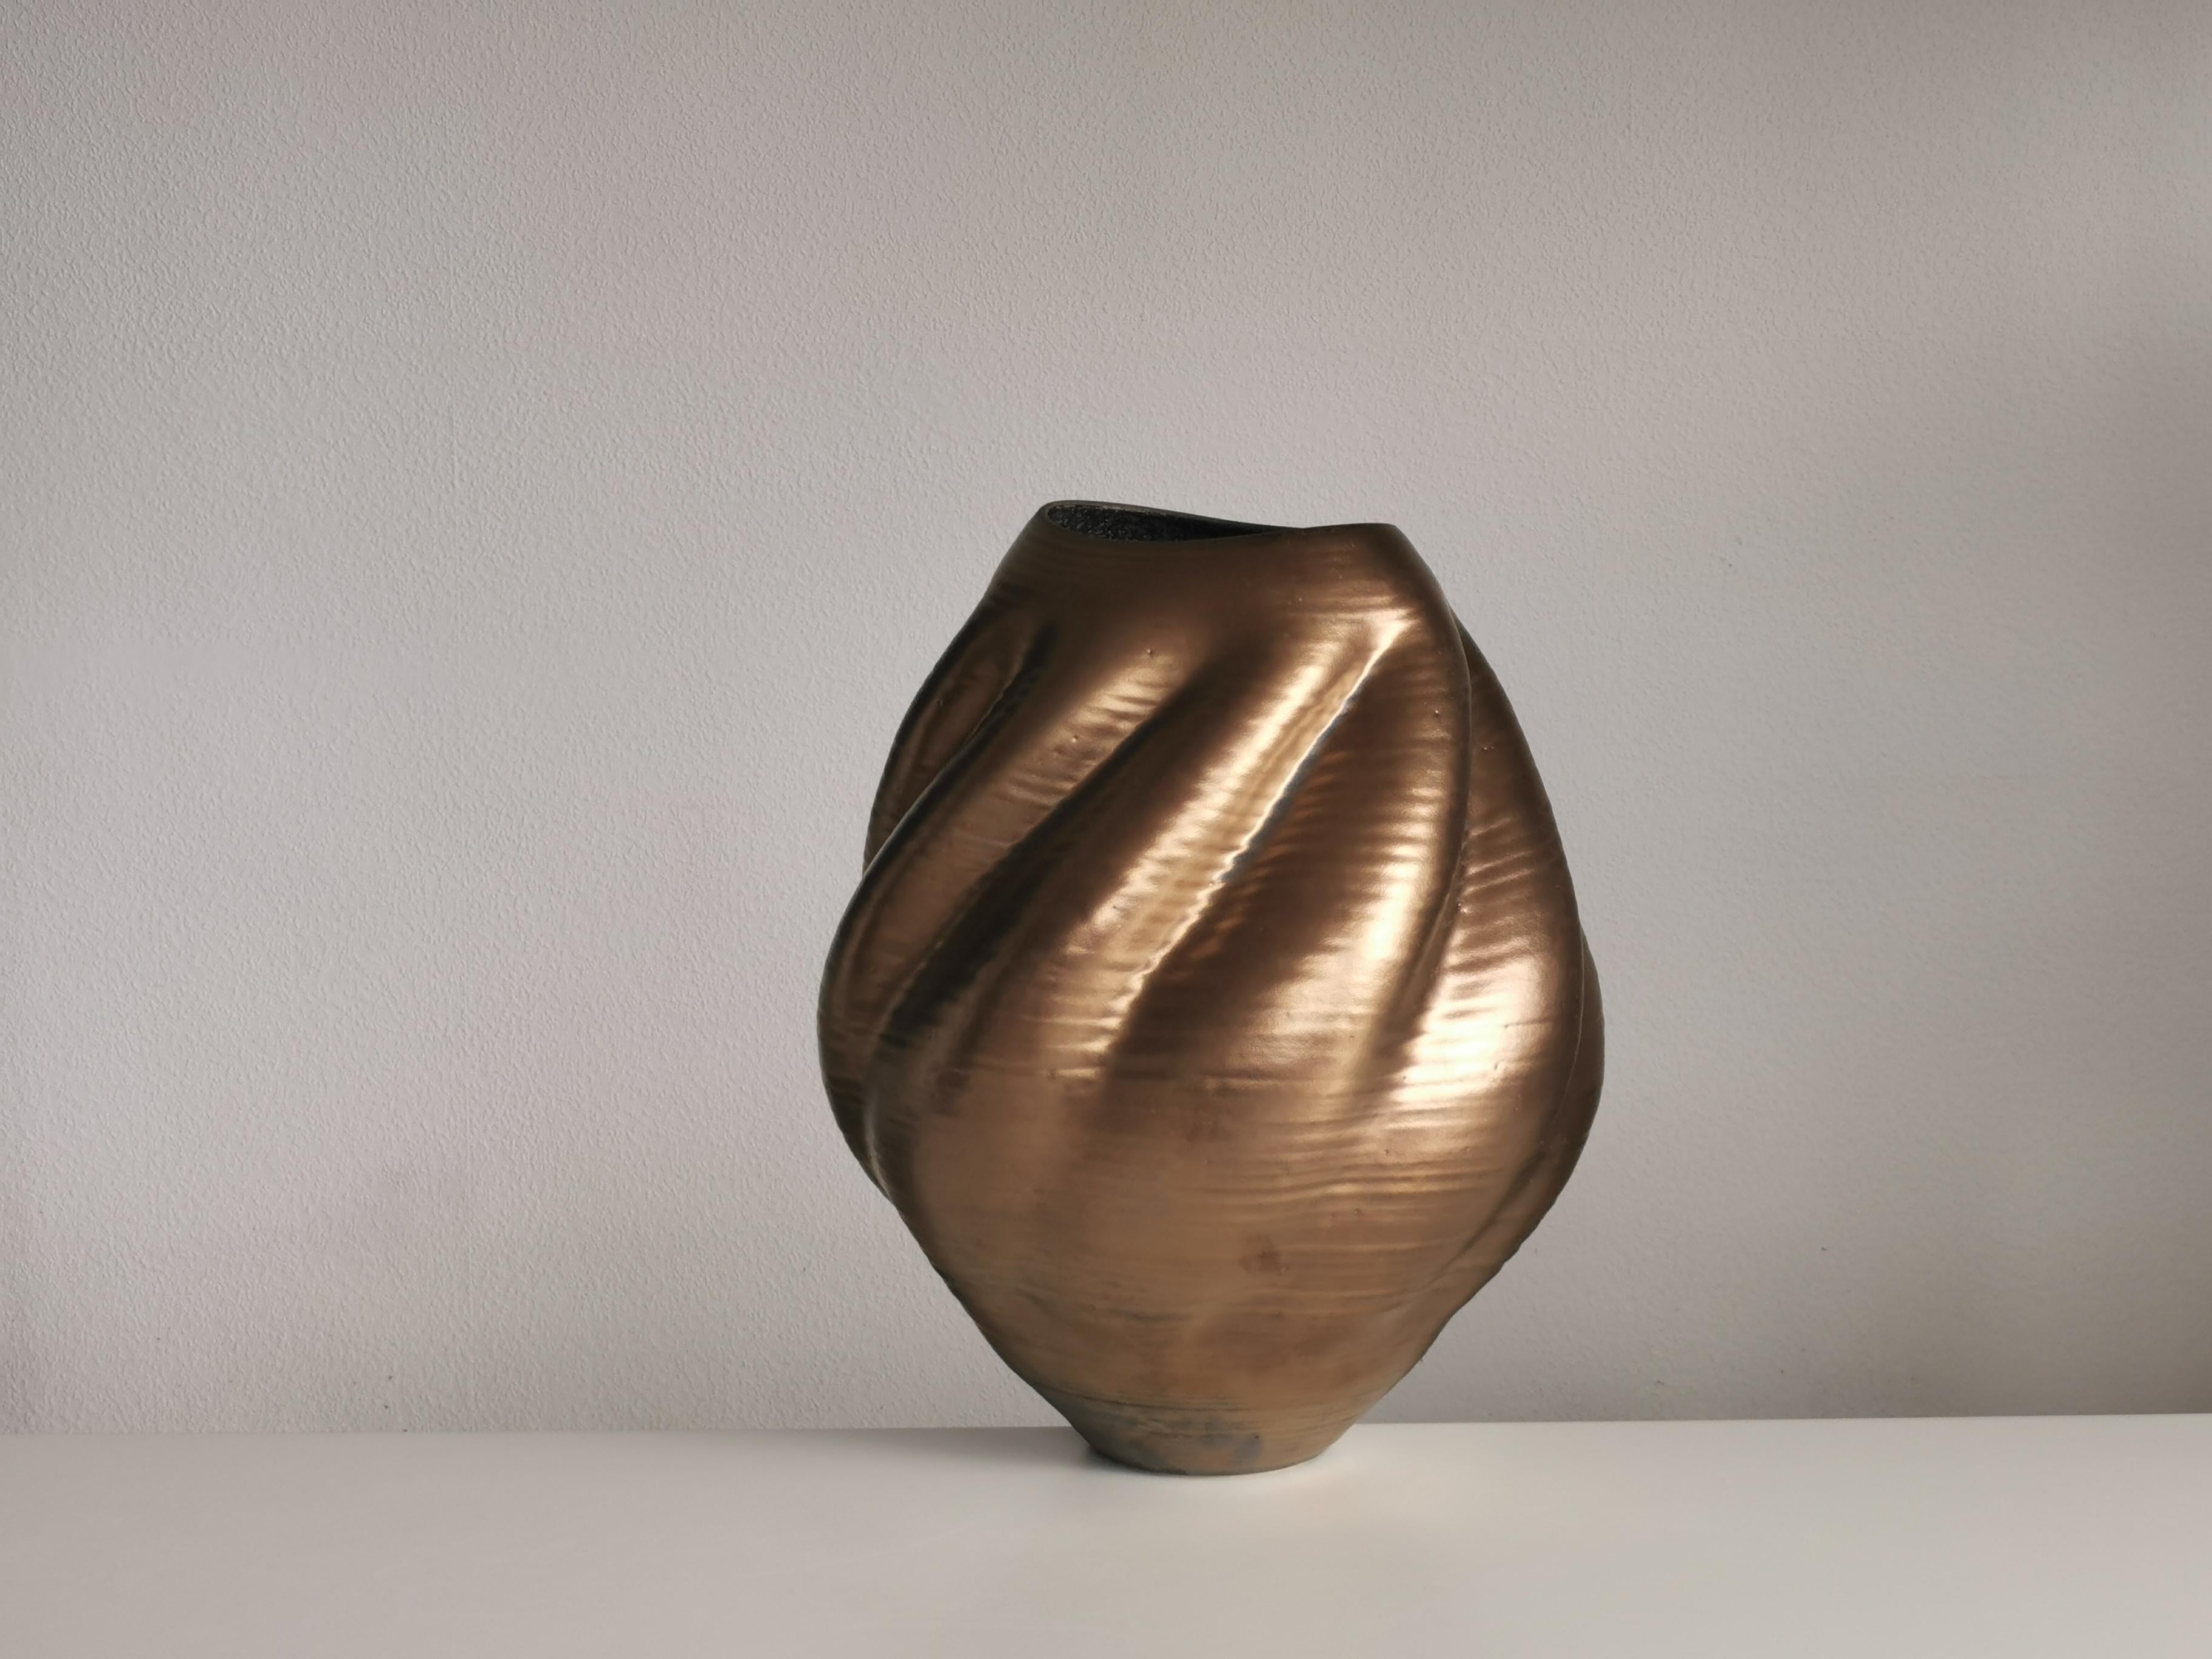 Clay Large Gold Wave Form, Unique Contemporary Ceramic Sculpture Vessel N.80